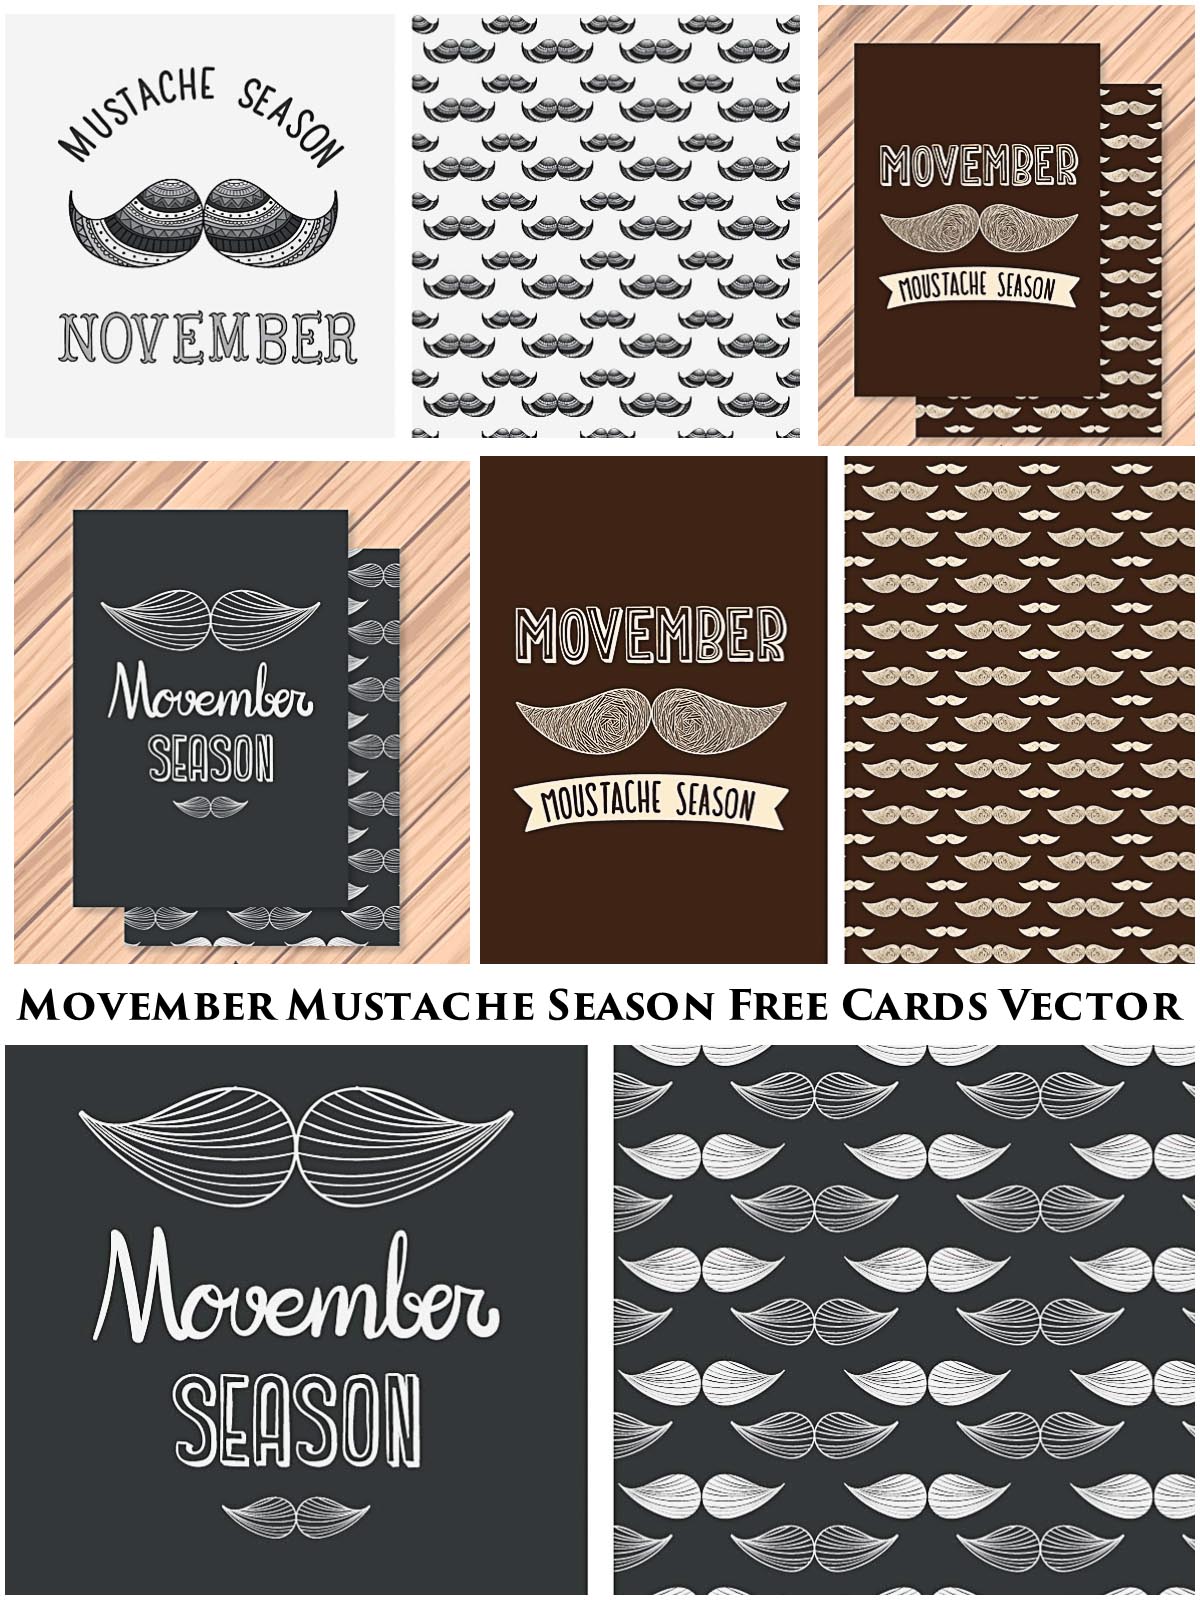 Movember mustache season hand drawn card vector